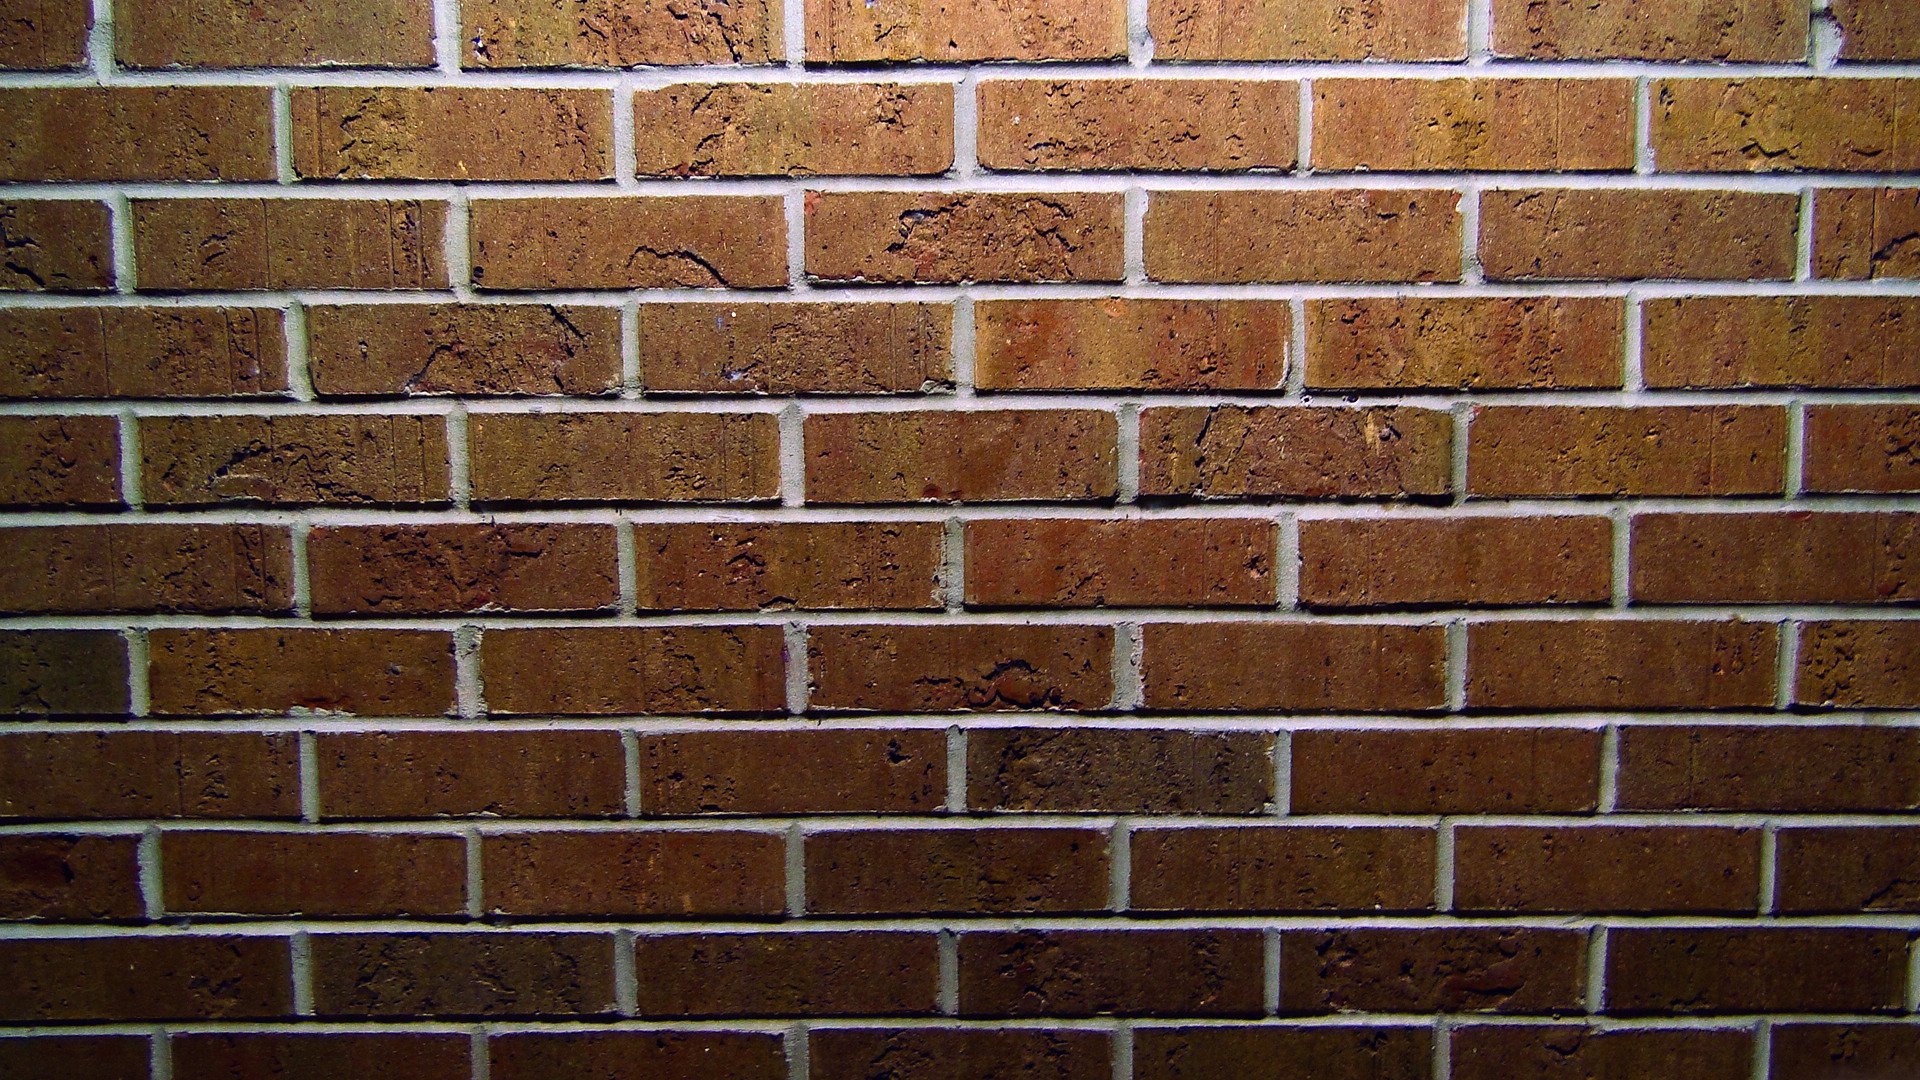 Brick HD  Wallpaper Background Image 1920x1080 ID 